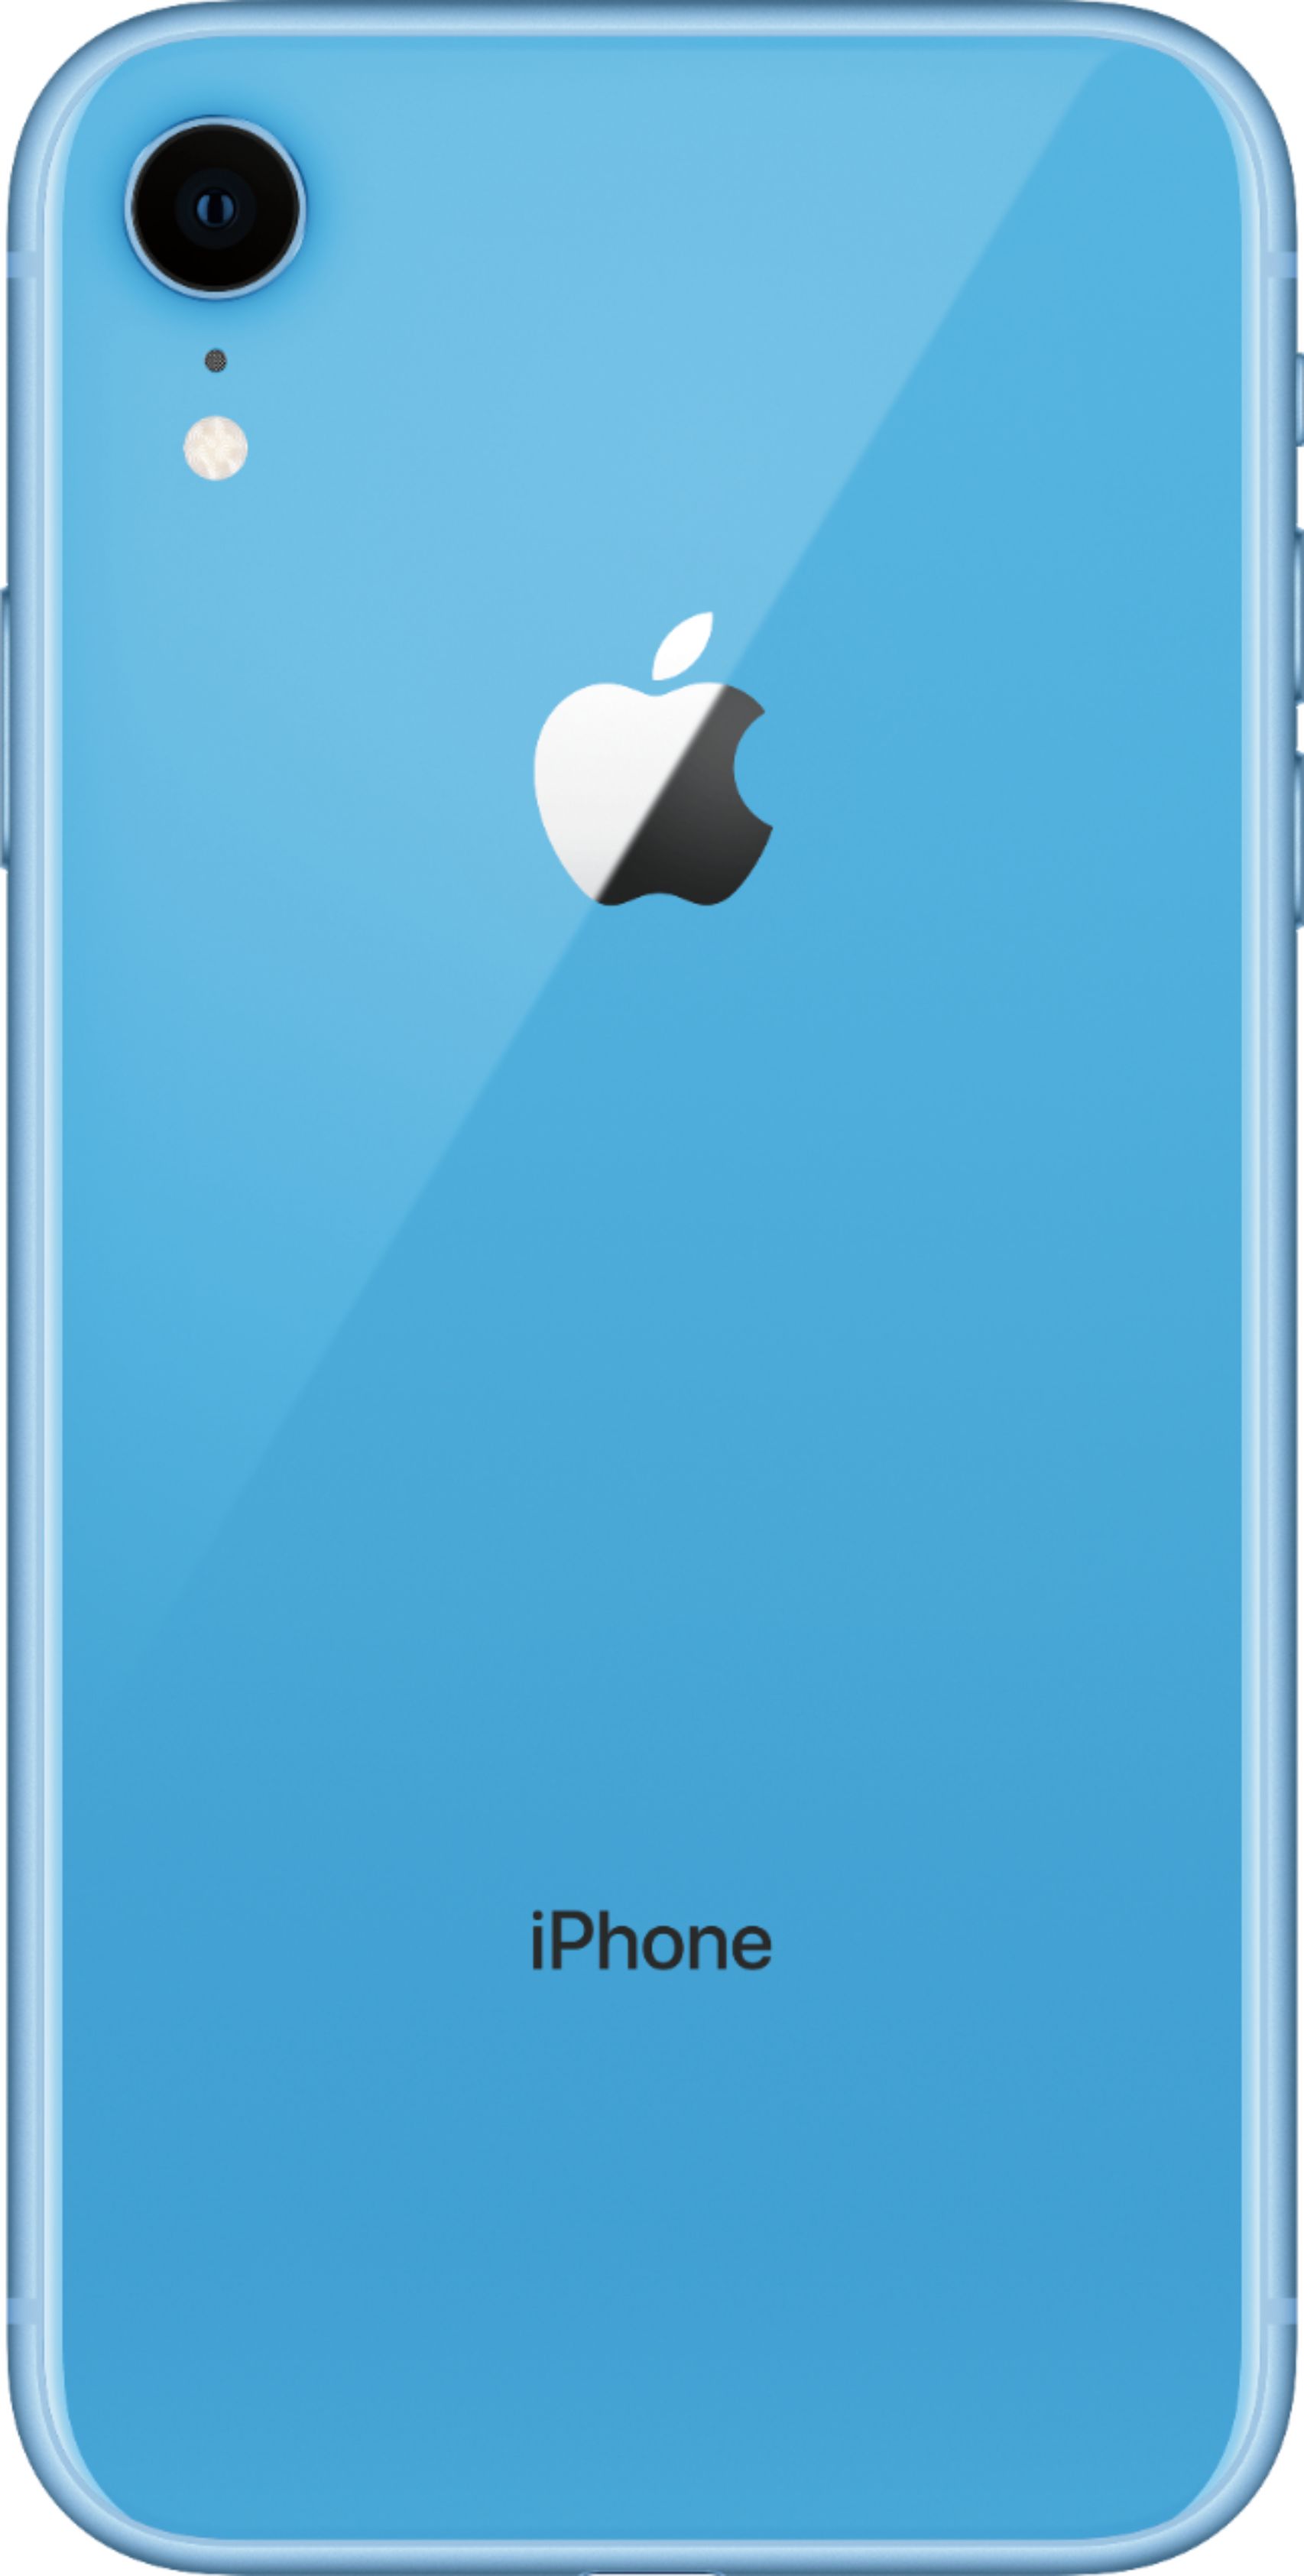 iPhone XR 128GB ブルー | www.aimeeferre.com